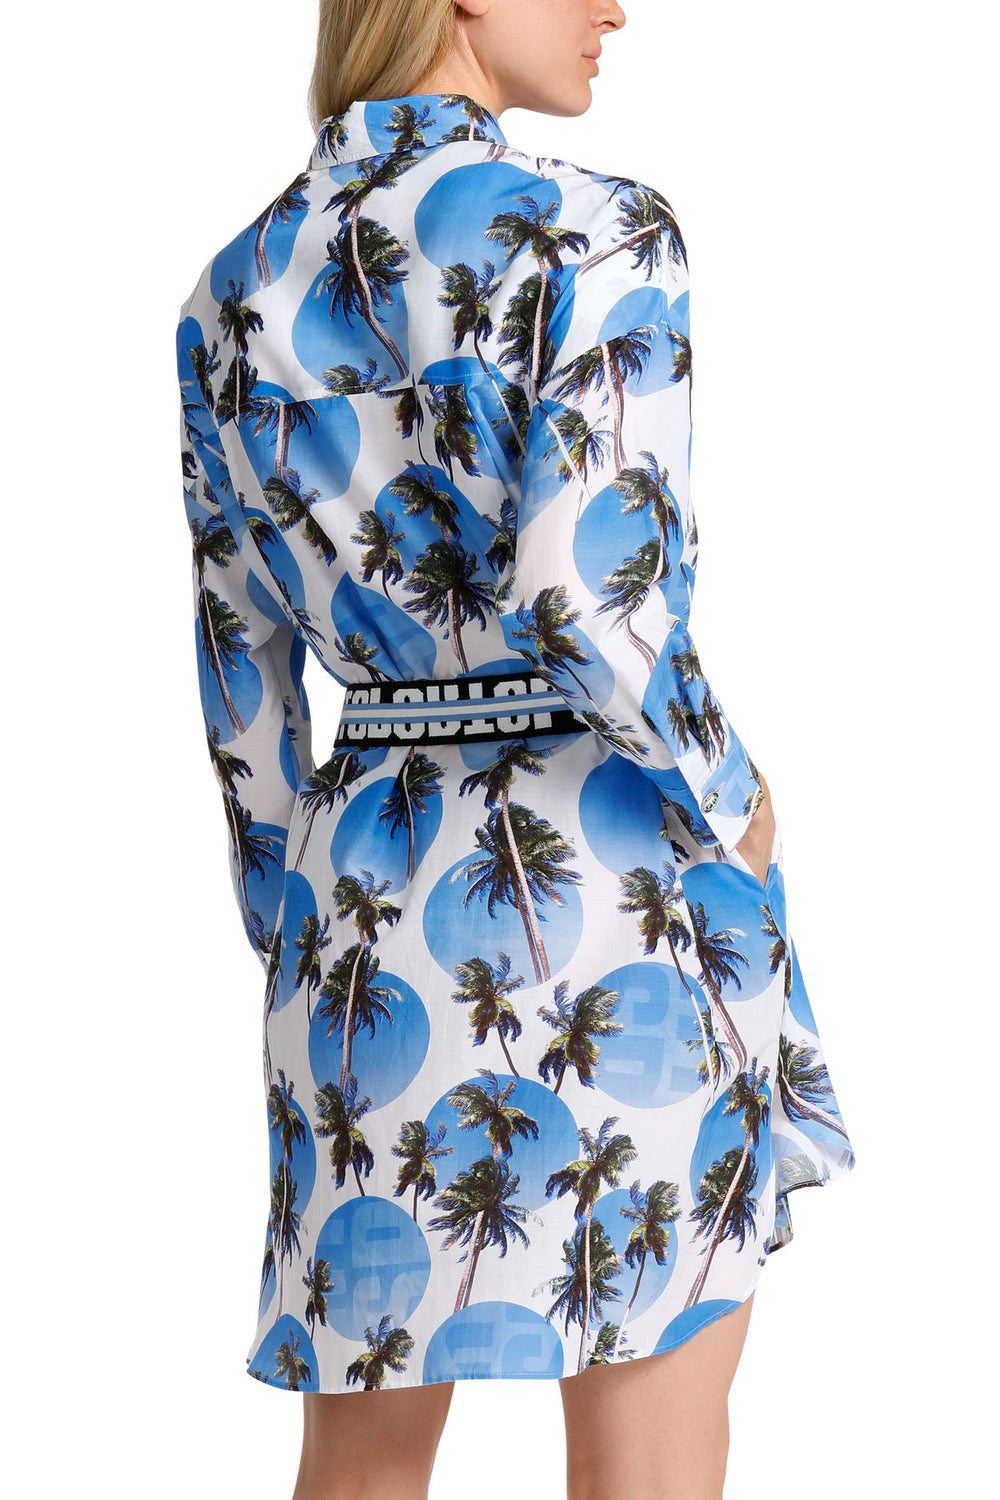 Marc Cain Sports WS 21.42 W44 363 Bright Azure Blue Palm Shirt Dress - Olivia Grace Fashion